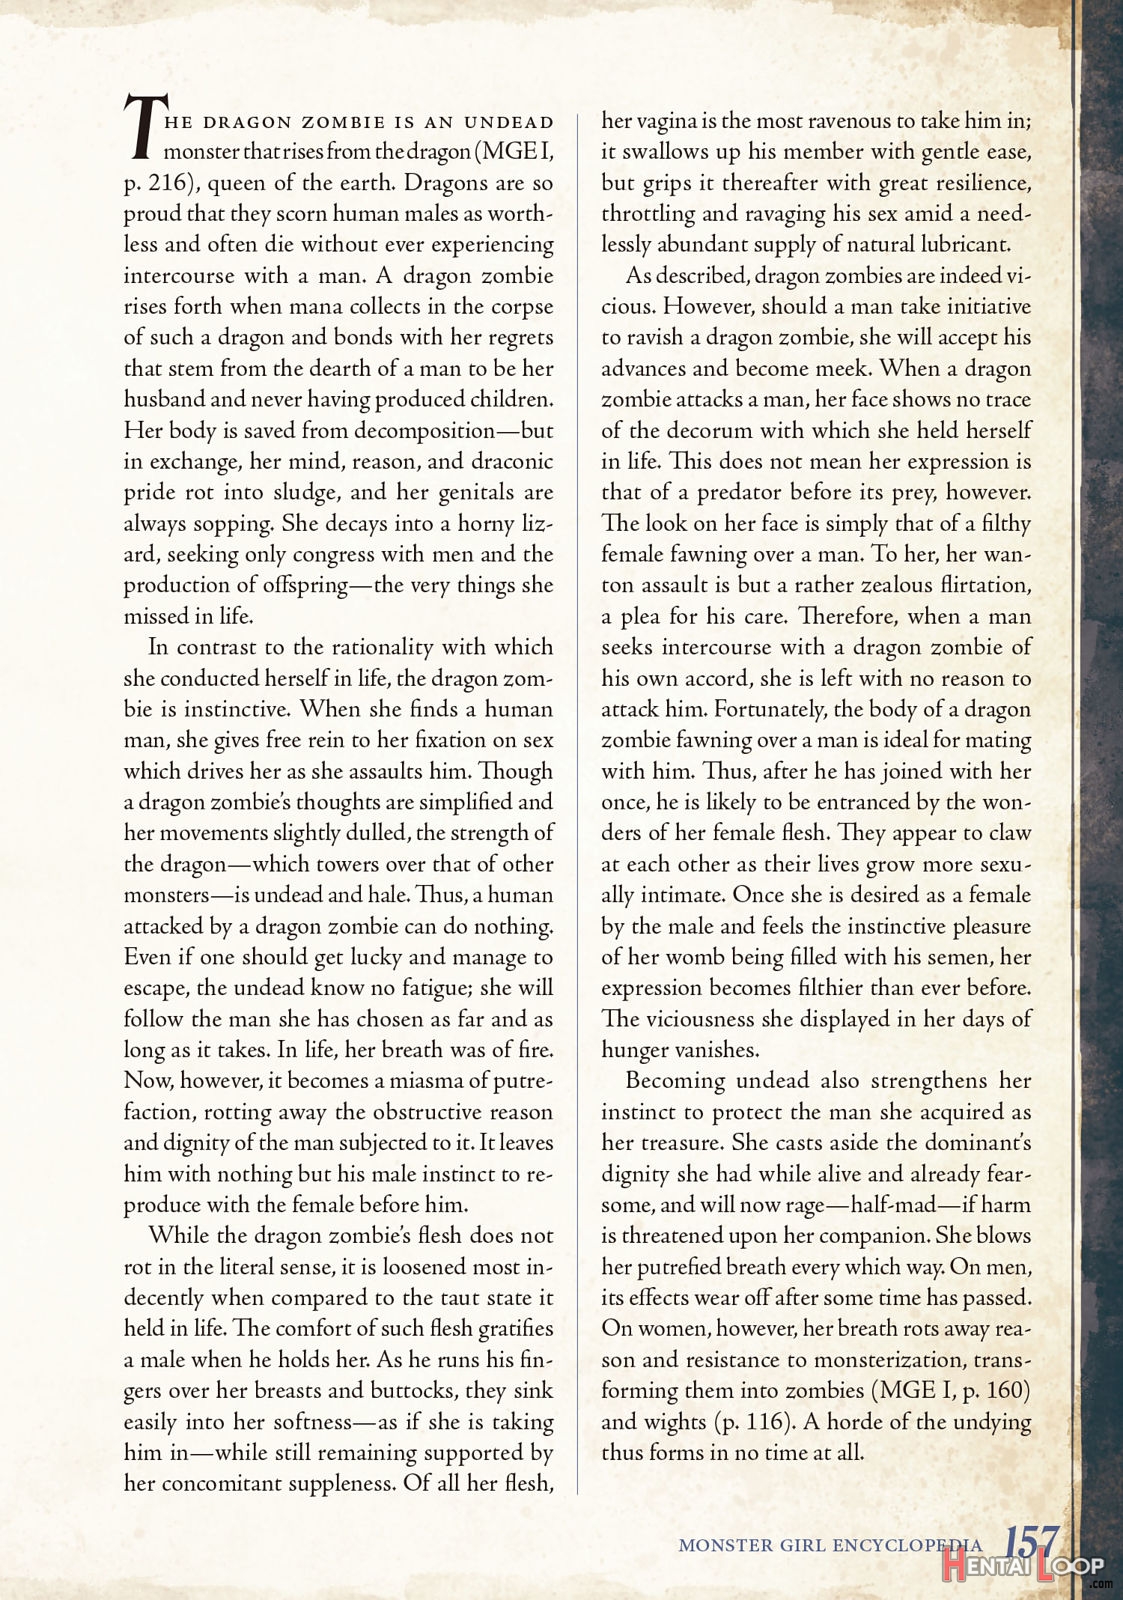 Monster Girl Encyclopedia Vol. 2 page 158